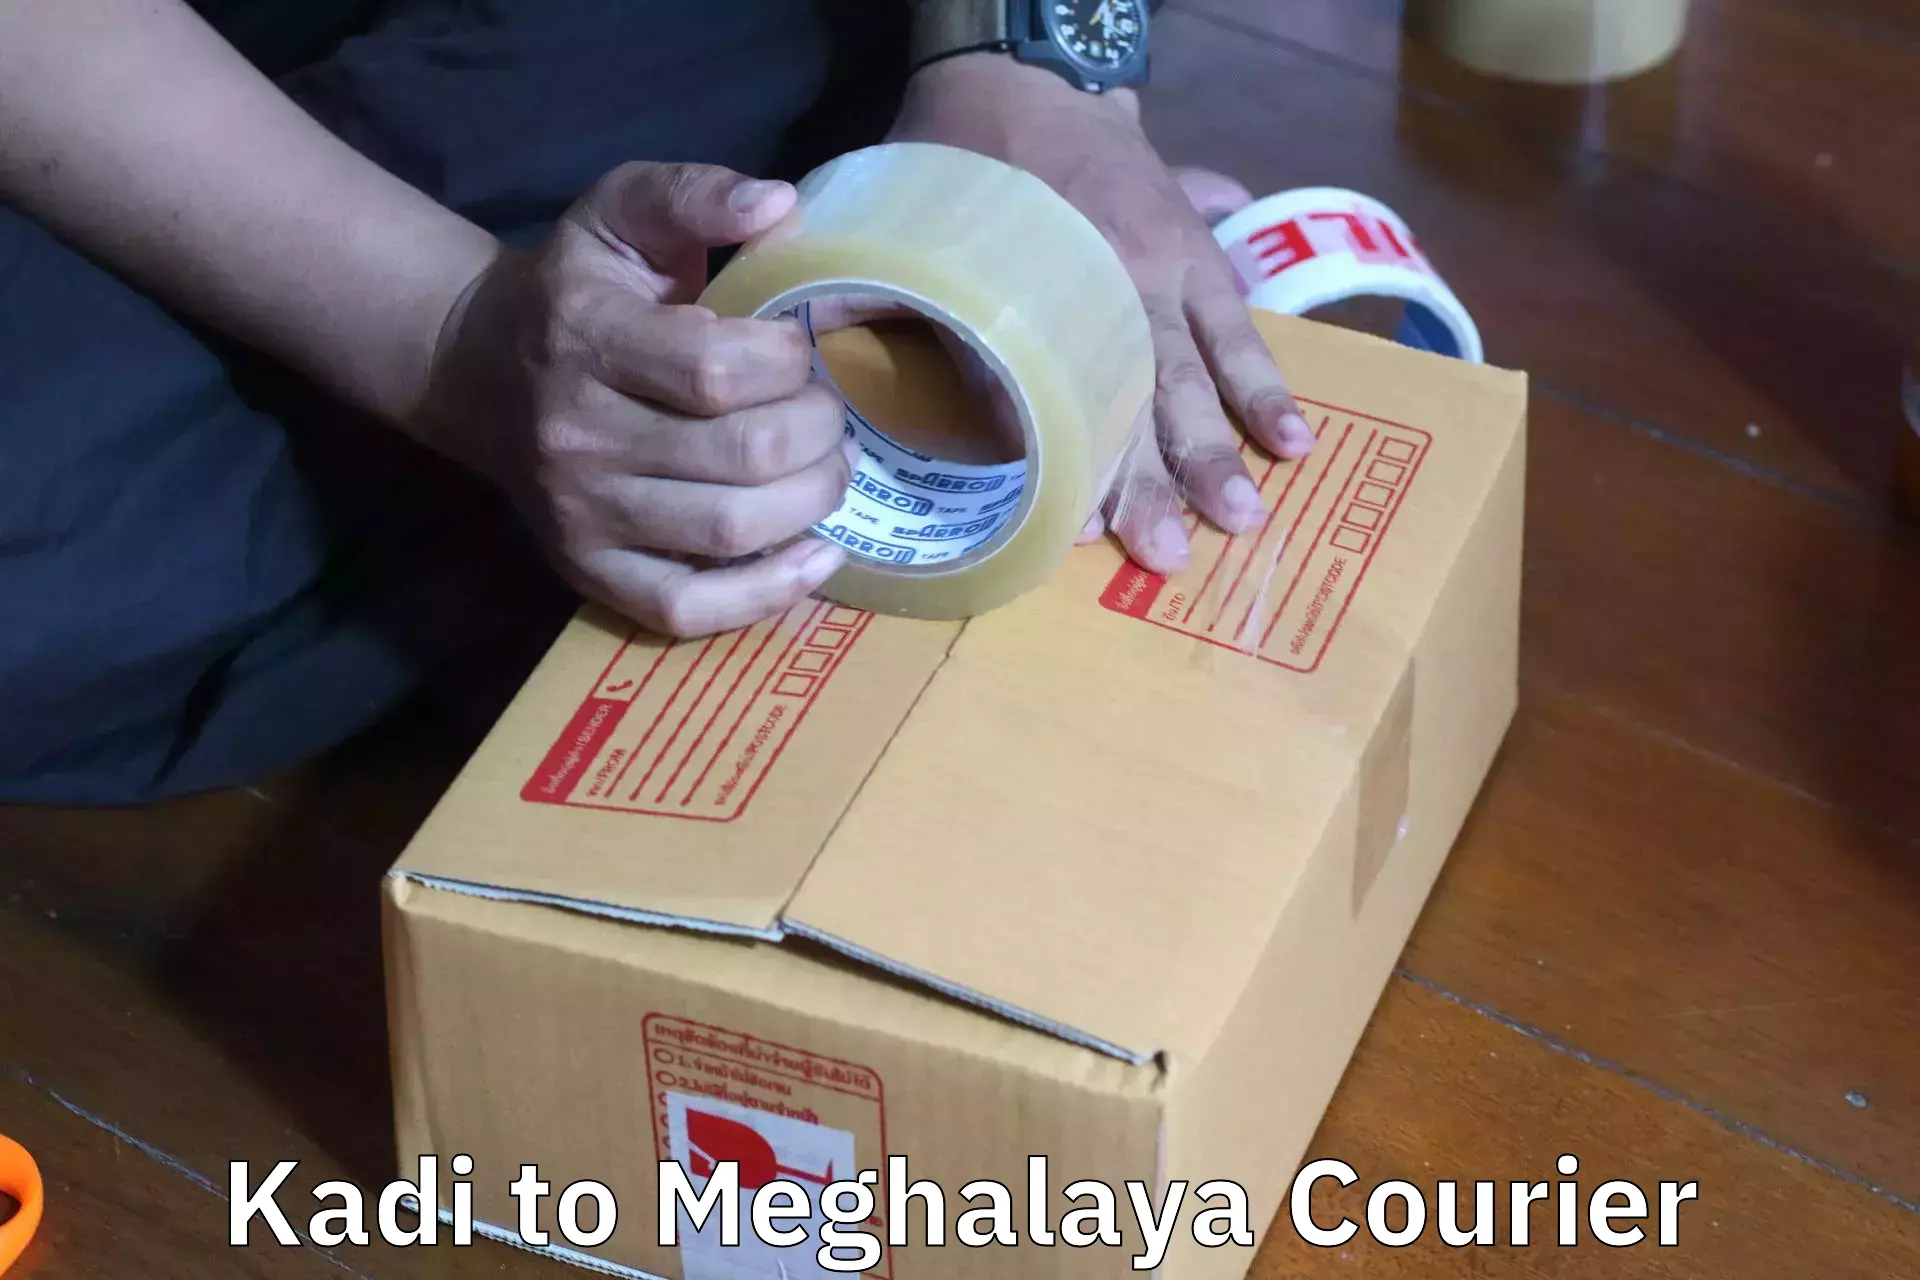 Furniture delivery service Kadi to Meghalaya